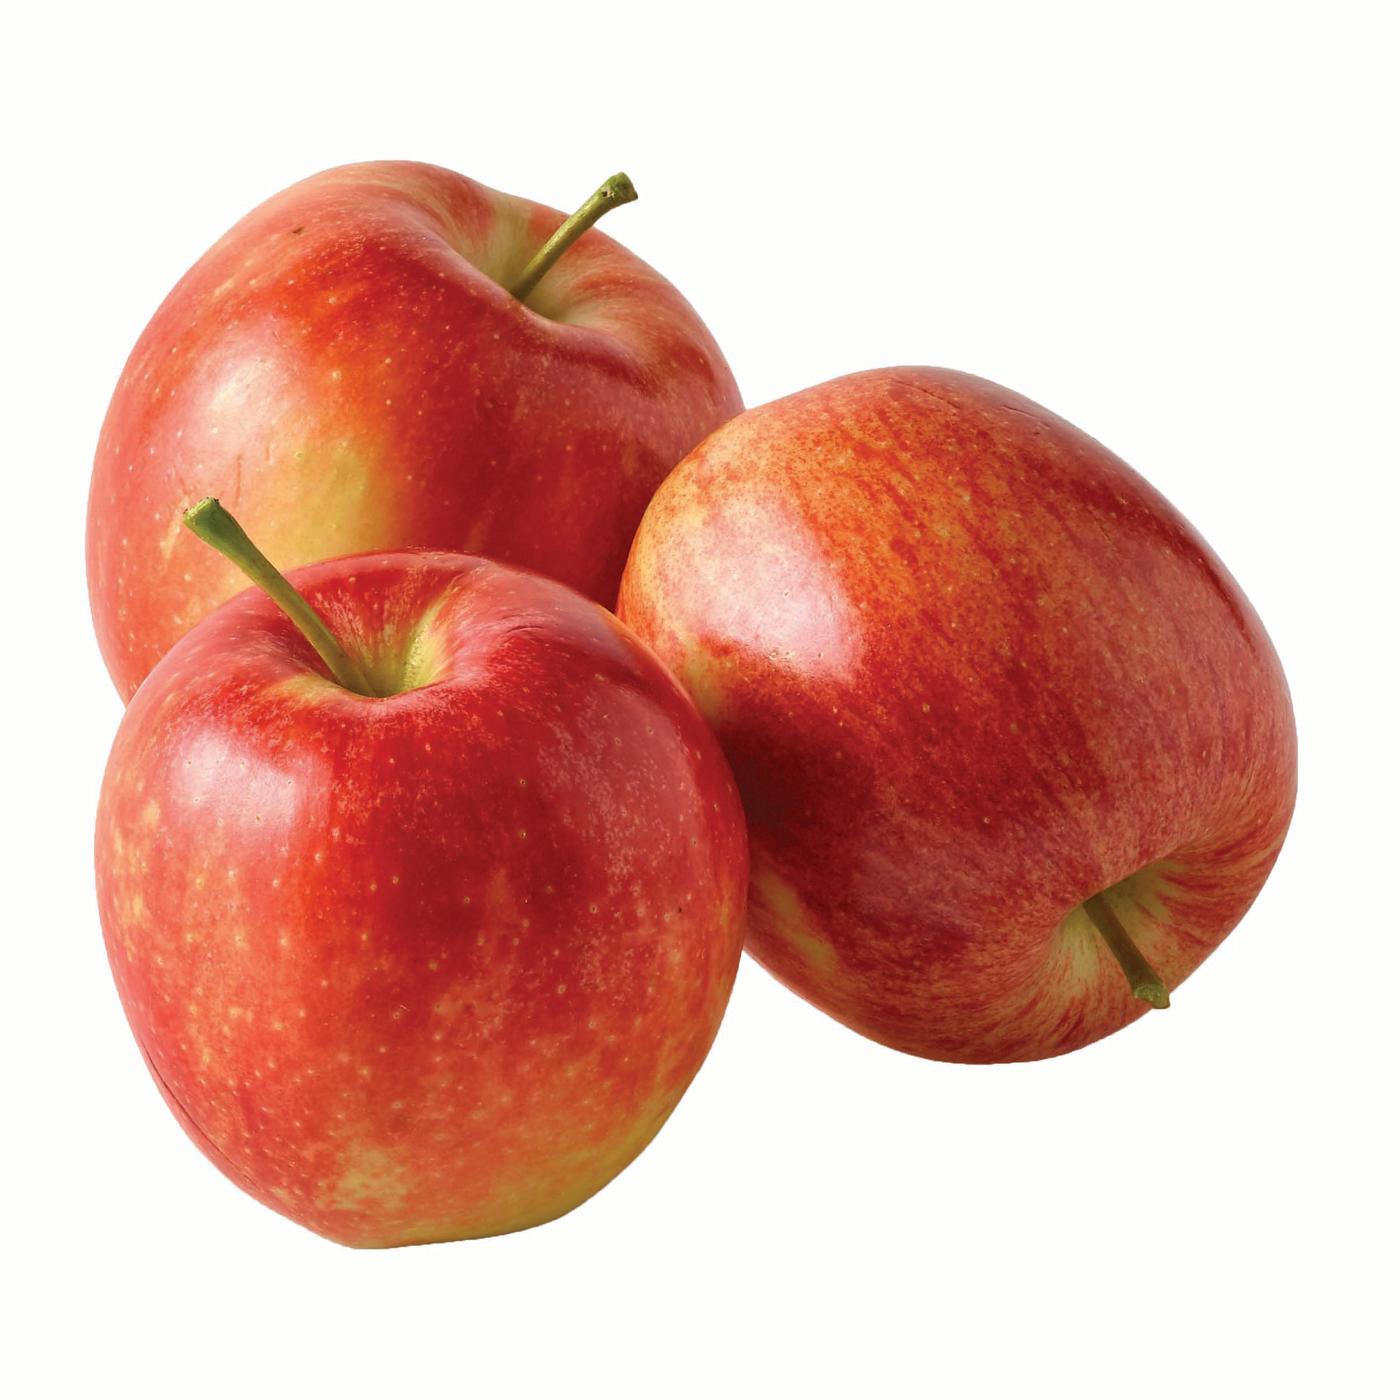 Fresh Organic Gala Apples